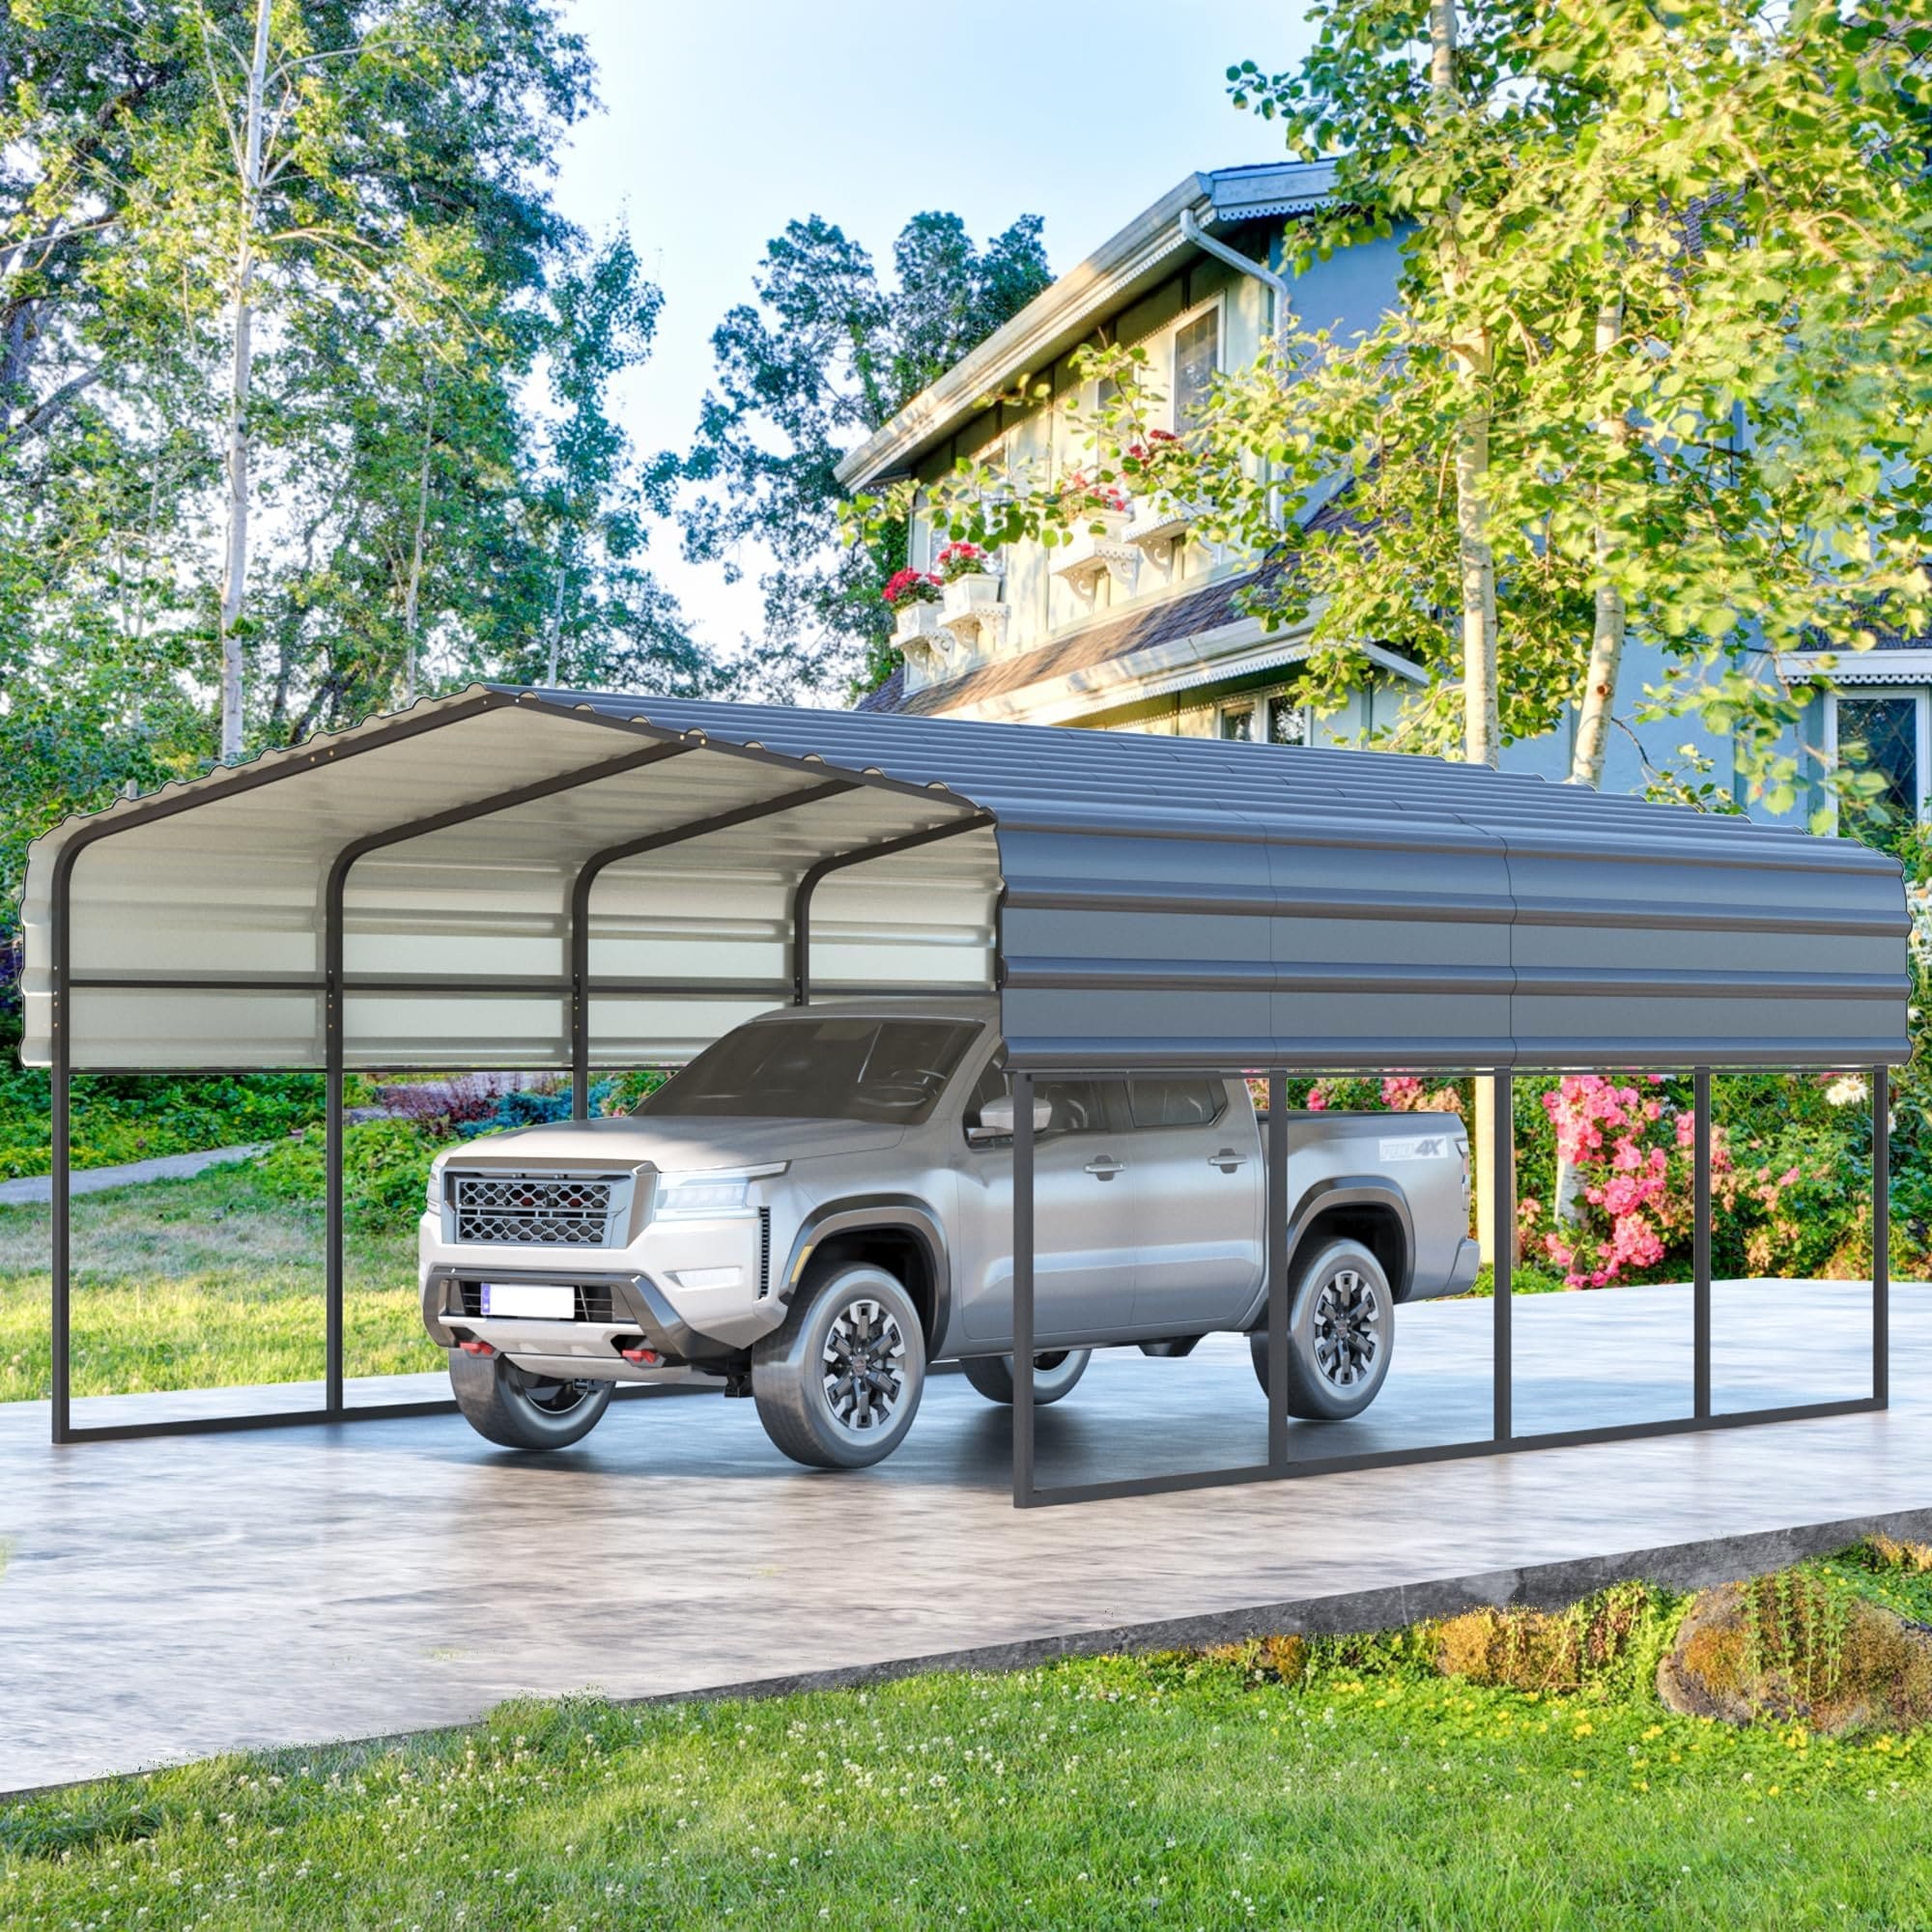 VEIKOUS 20' x 12' Outdoor Carport, Galvanized Metal Heavy Duty Garage Car  Storage Shelter, Grey